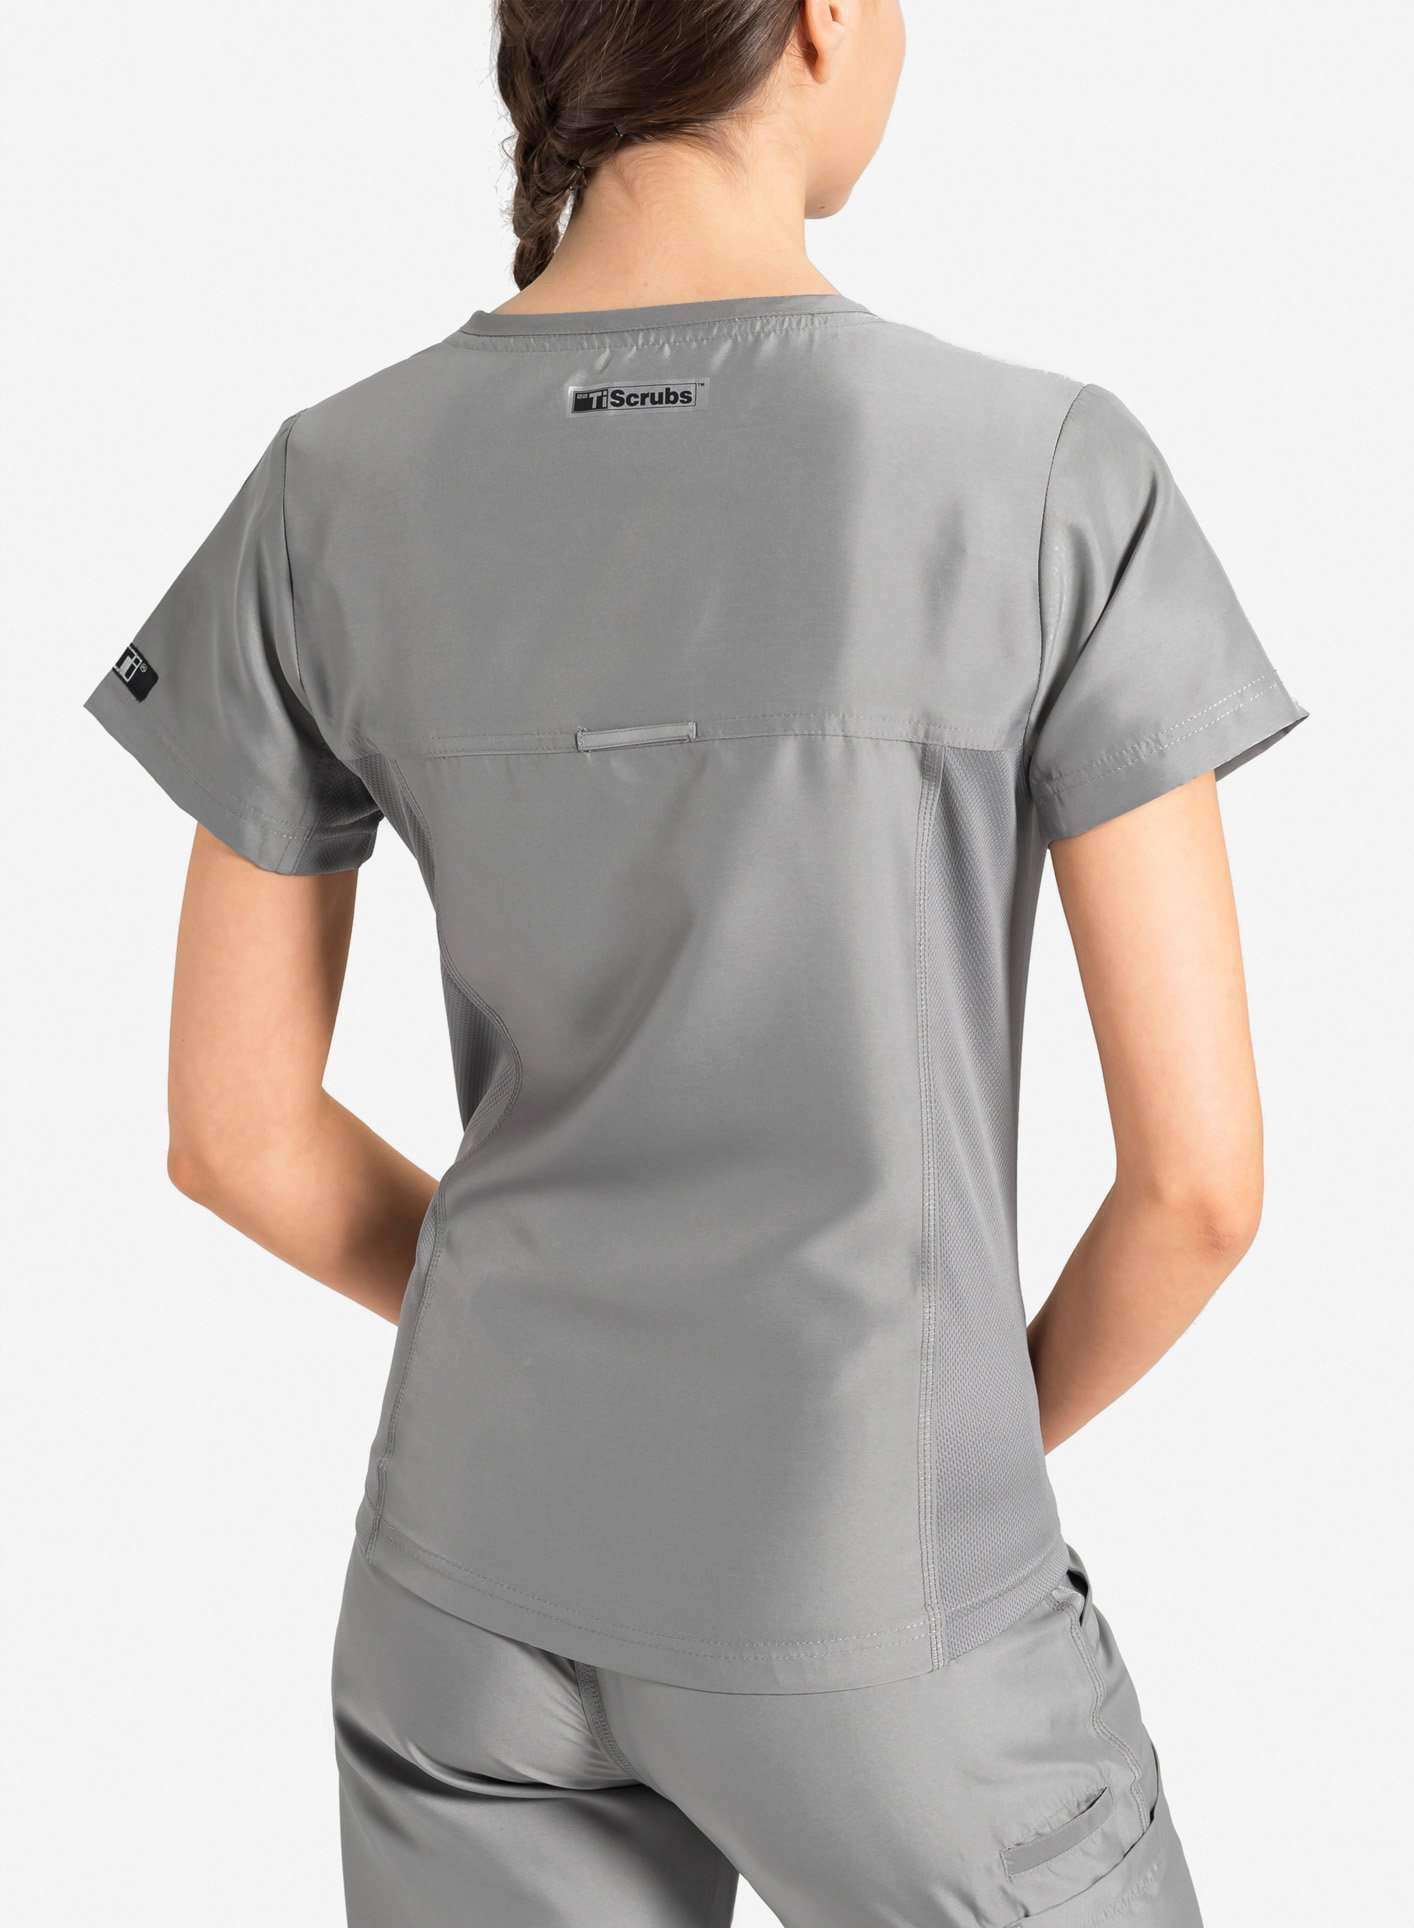 womens Elements short sleeve hidden pocket scrub top light gray